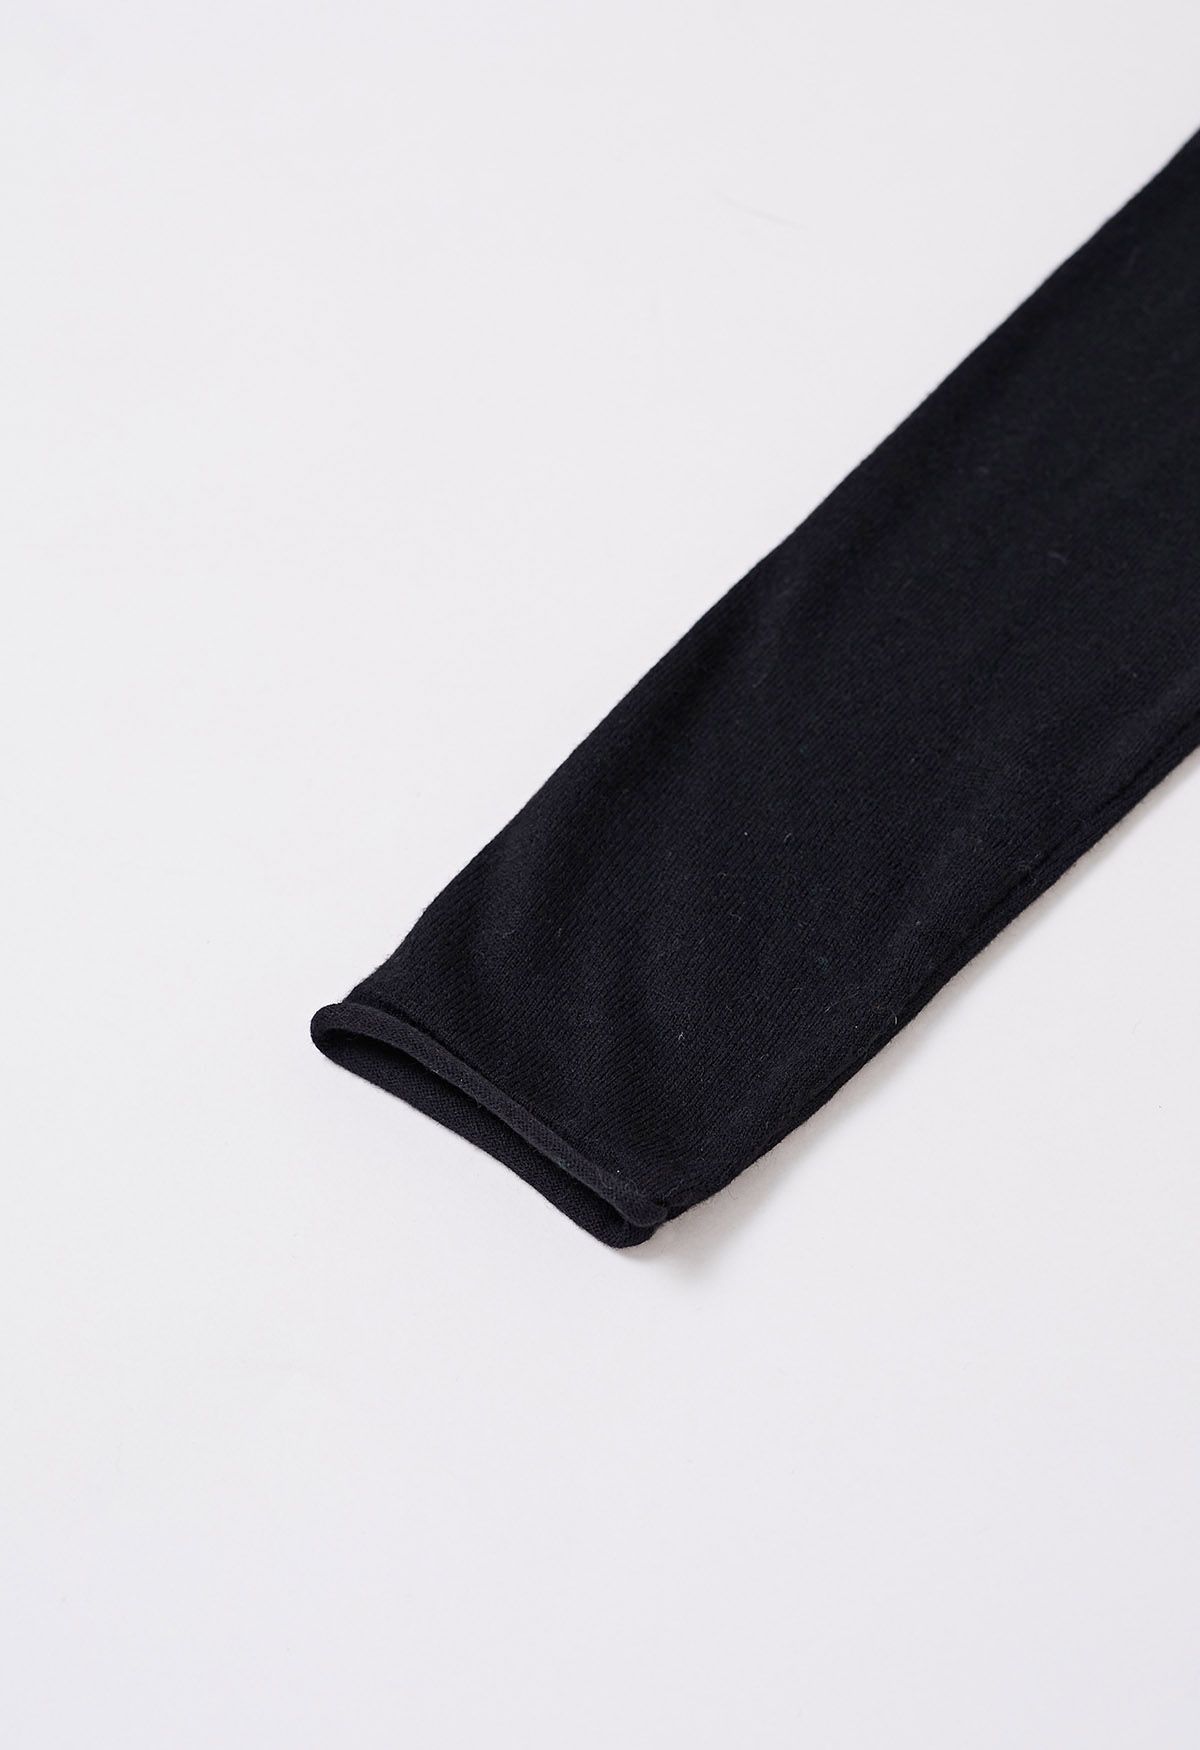 Effortless Elegance Wrap Knit Top in Black